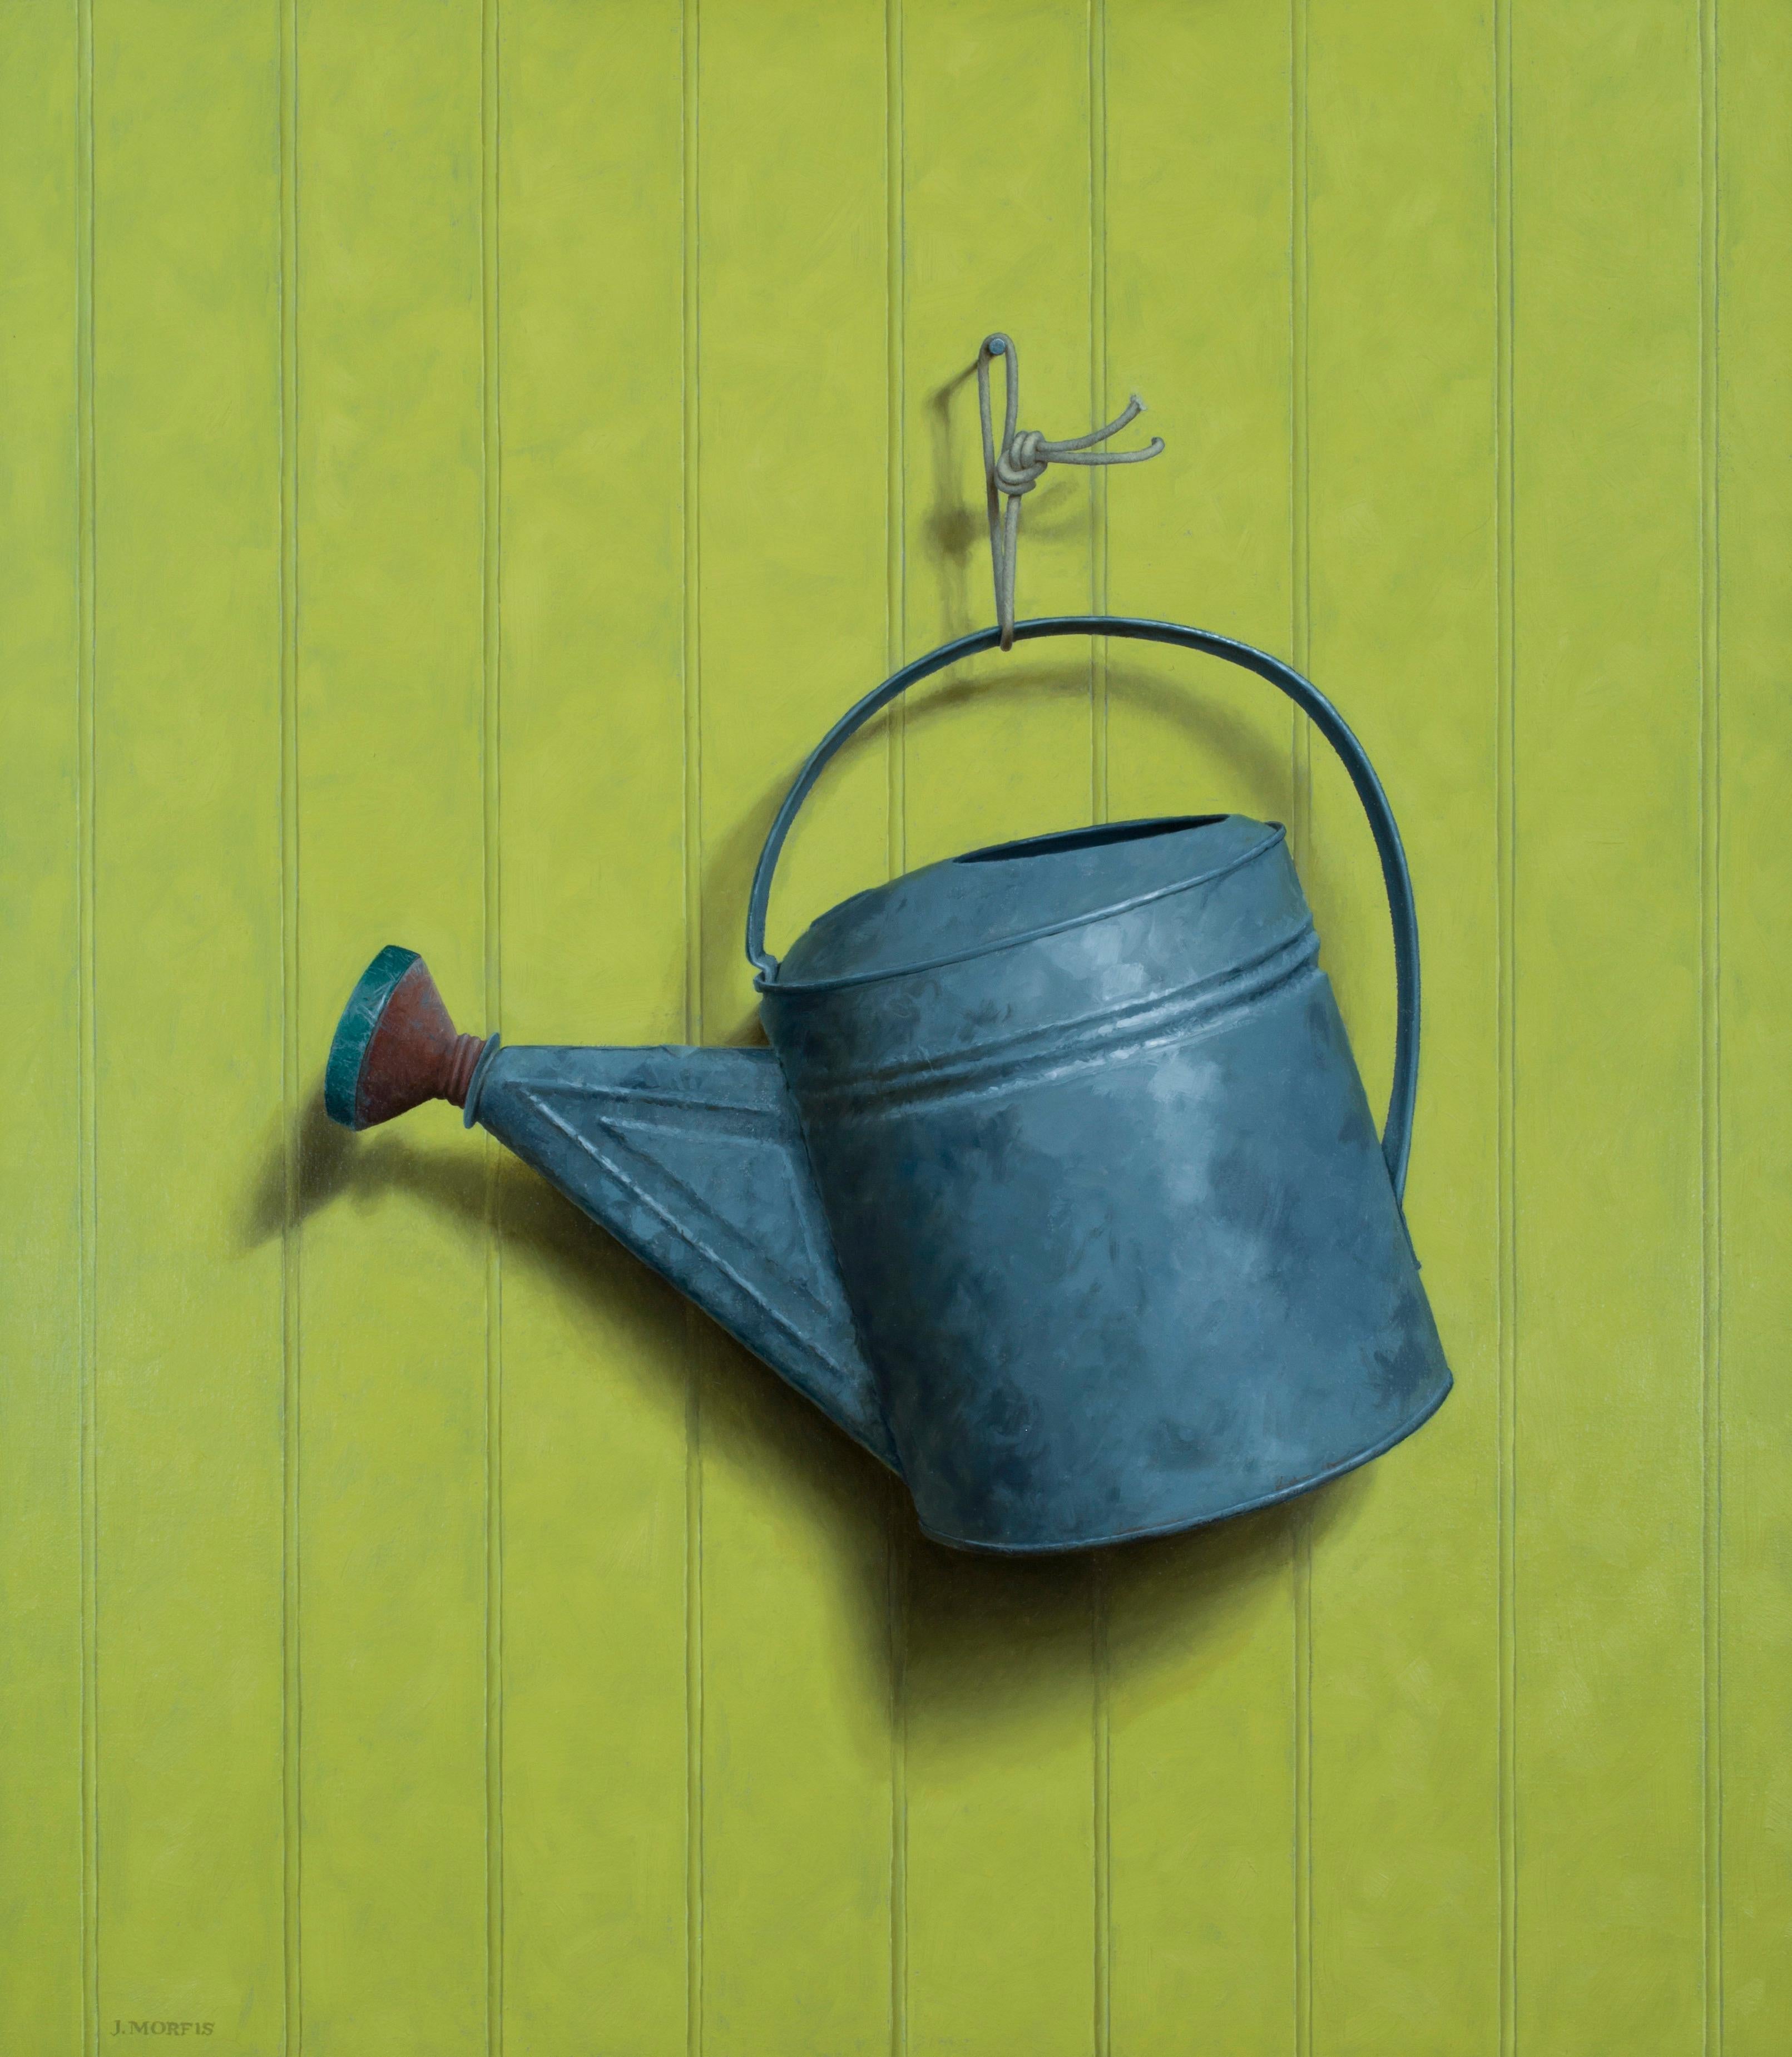 John Morfis Still-Life Painting - "Lauren's Watering Can" hyperrealist oil painting, metal gardening tool, yellow 